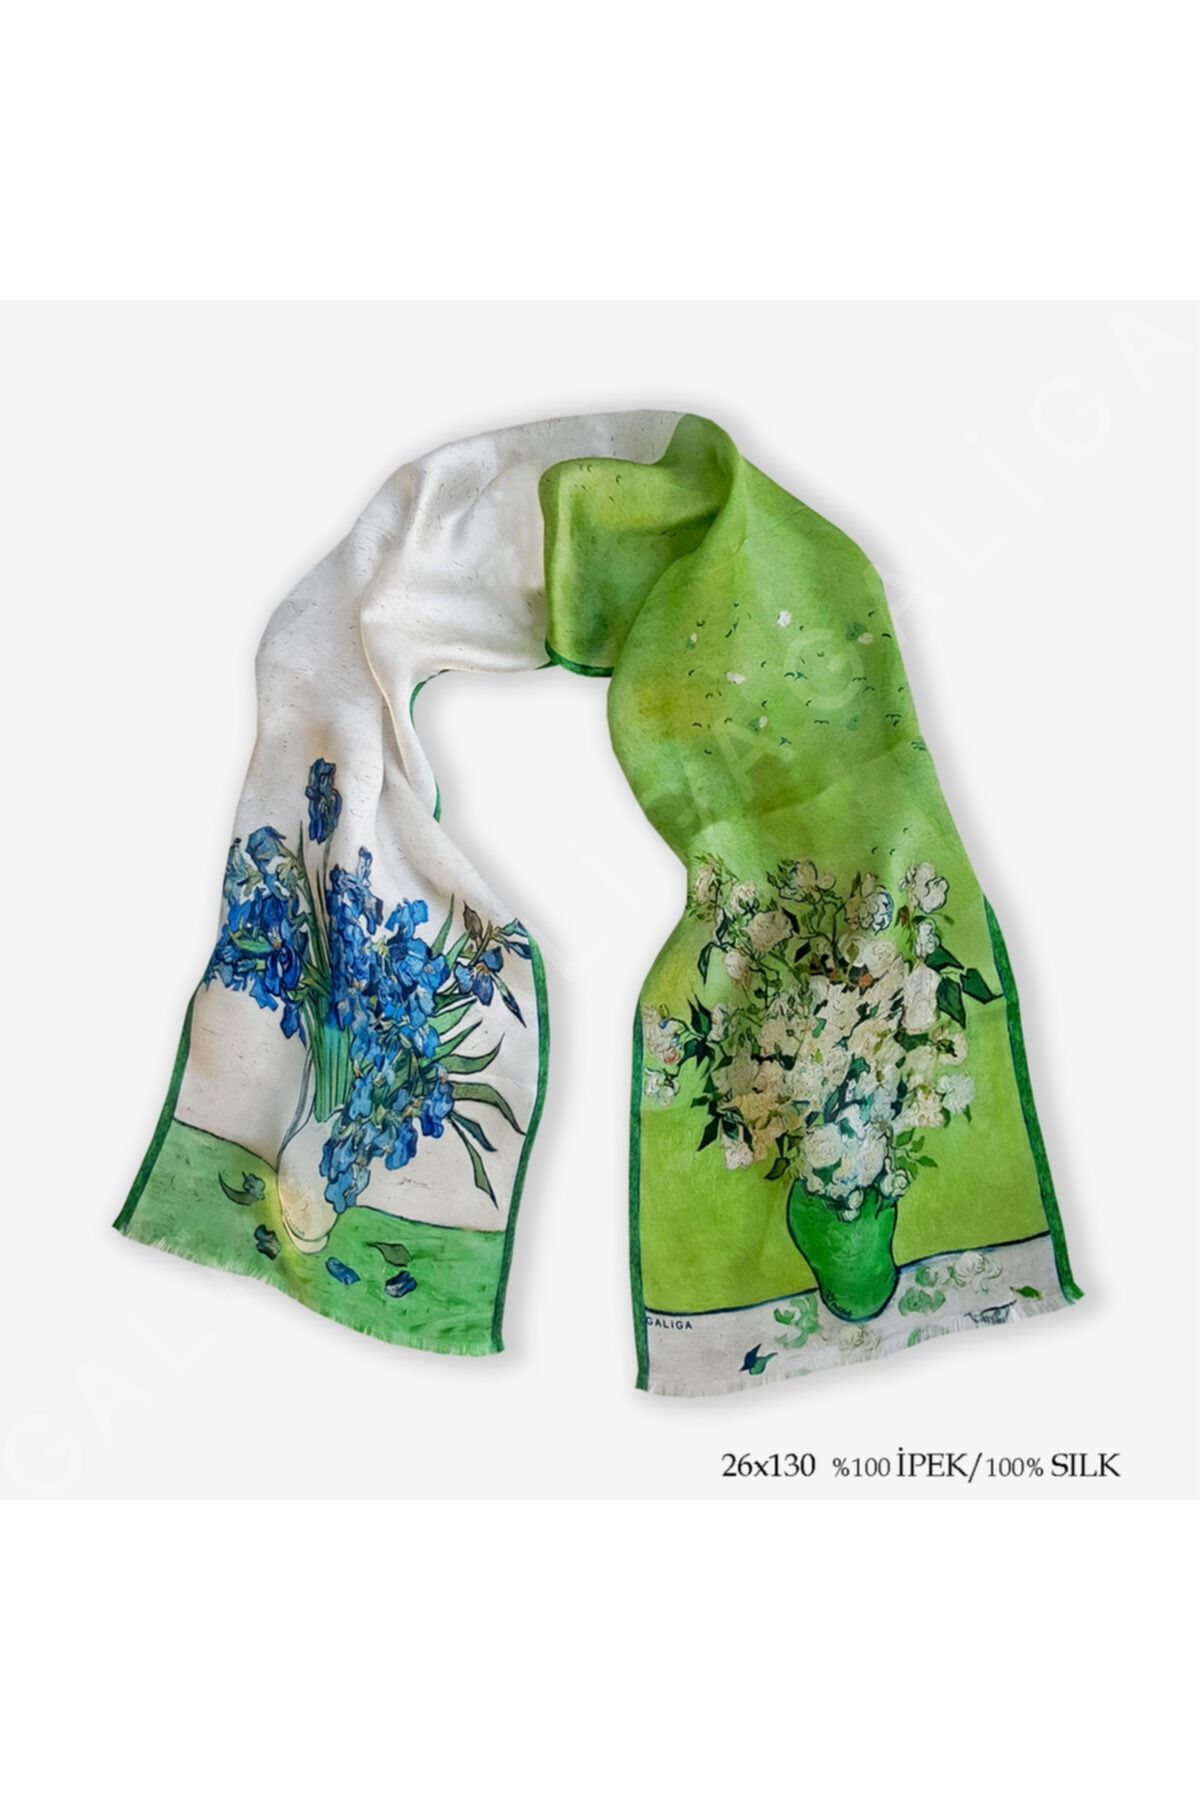 Galiga Van Gogh Roses %100 Ipek Fular 26*130cm "art On Silk"